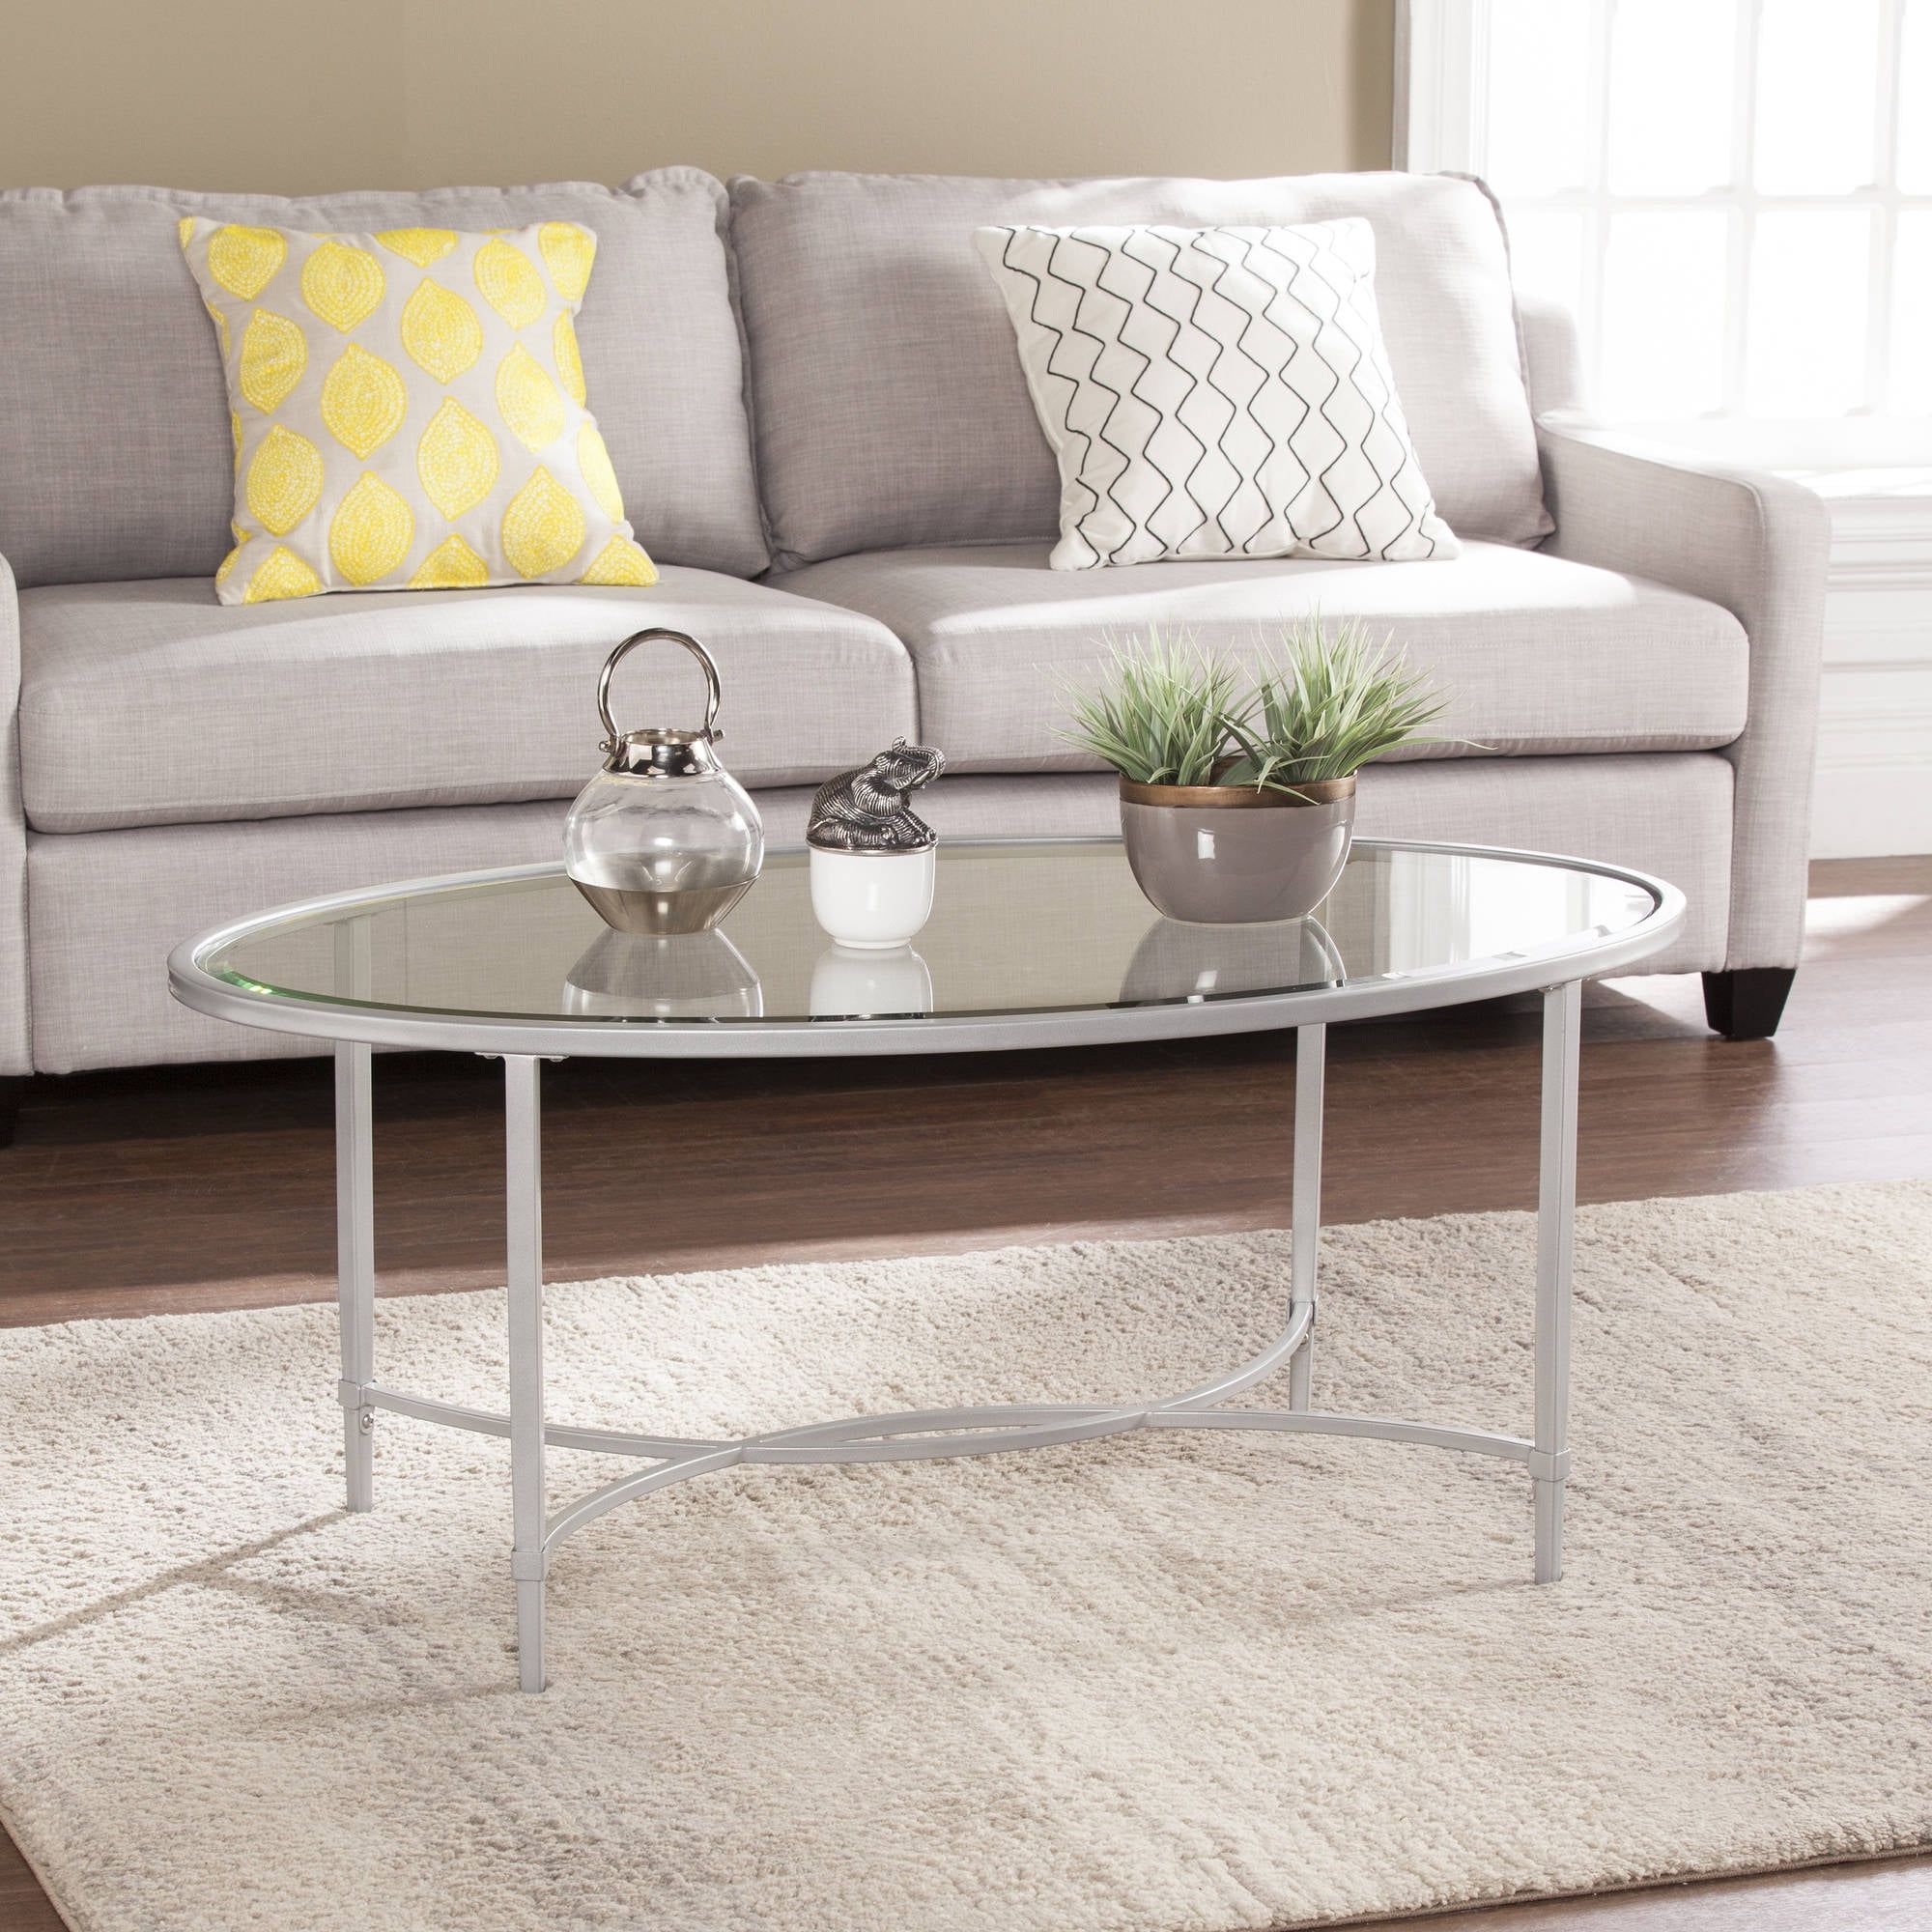 Fashionable Quibilah Metal/glass Oval Coffee Table, Silver – Walmart In Oval Glass Coffee Tables (View 7 of 15)